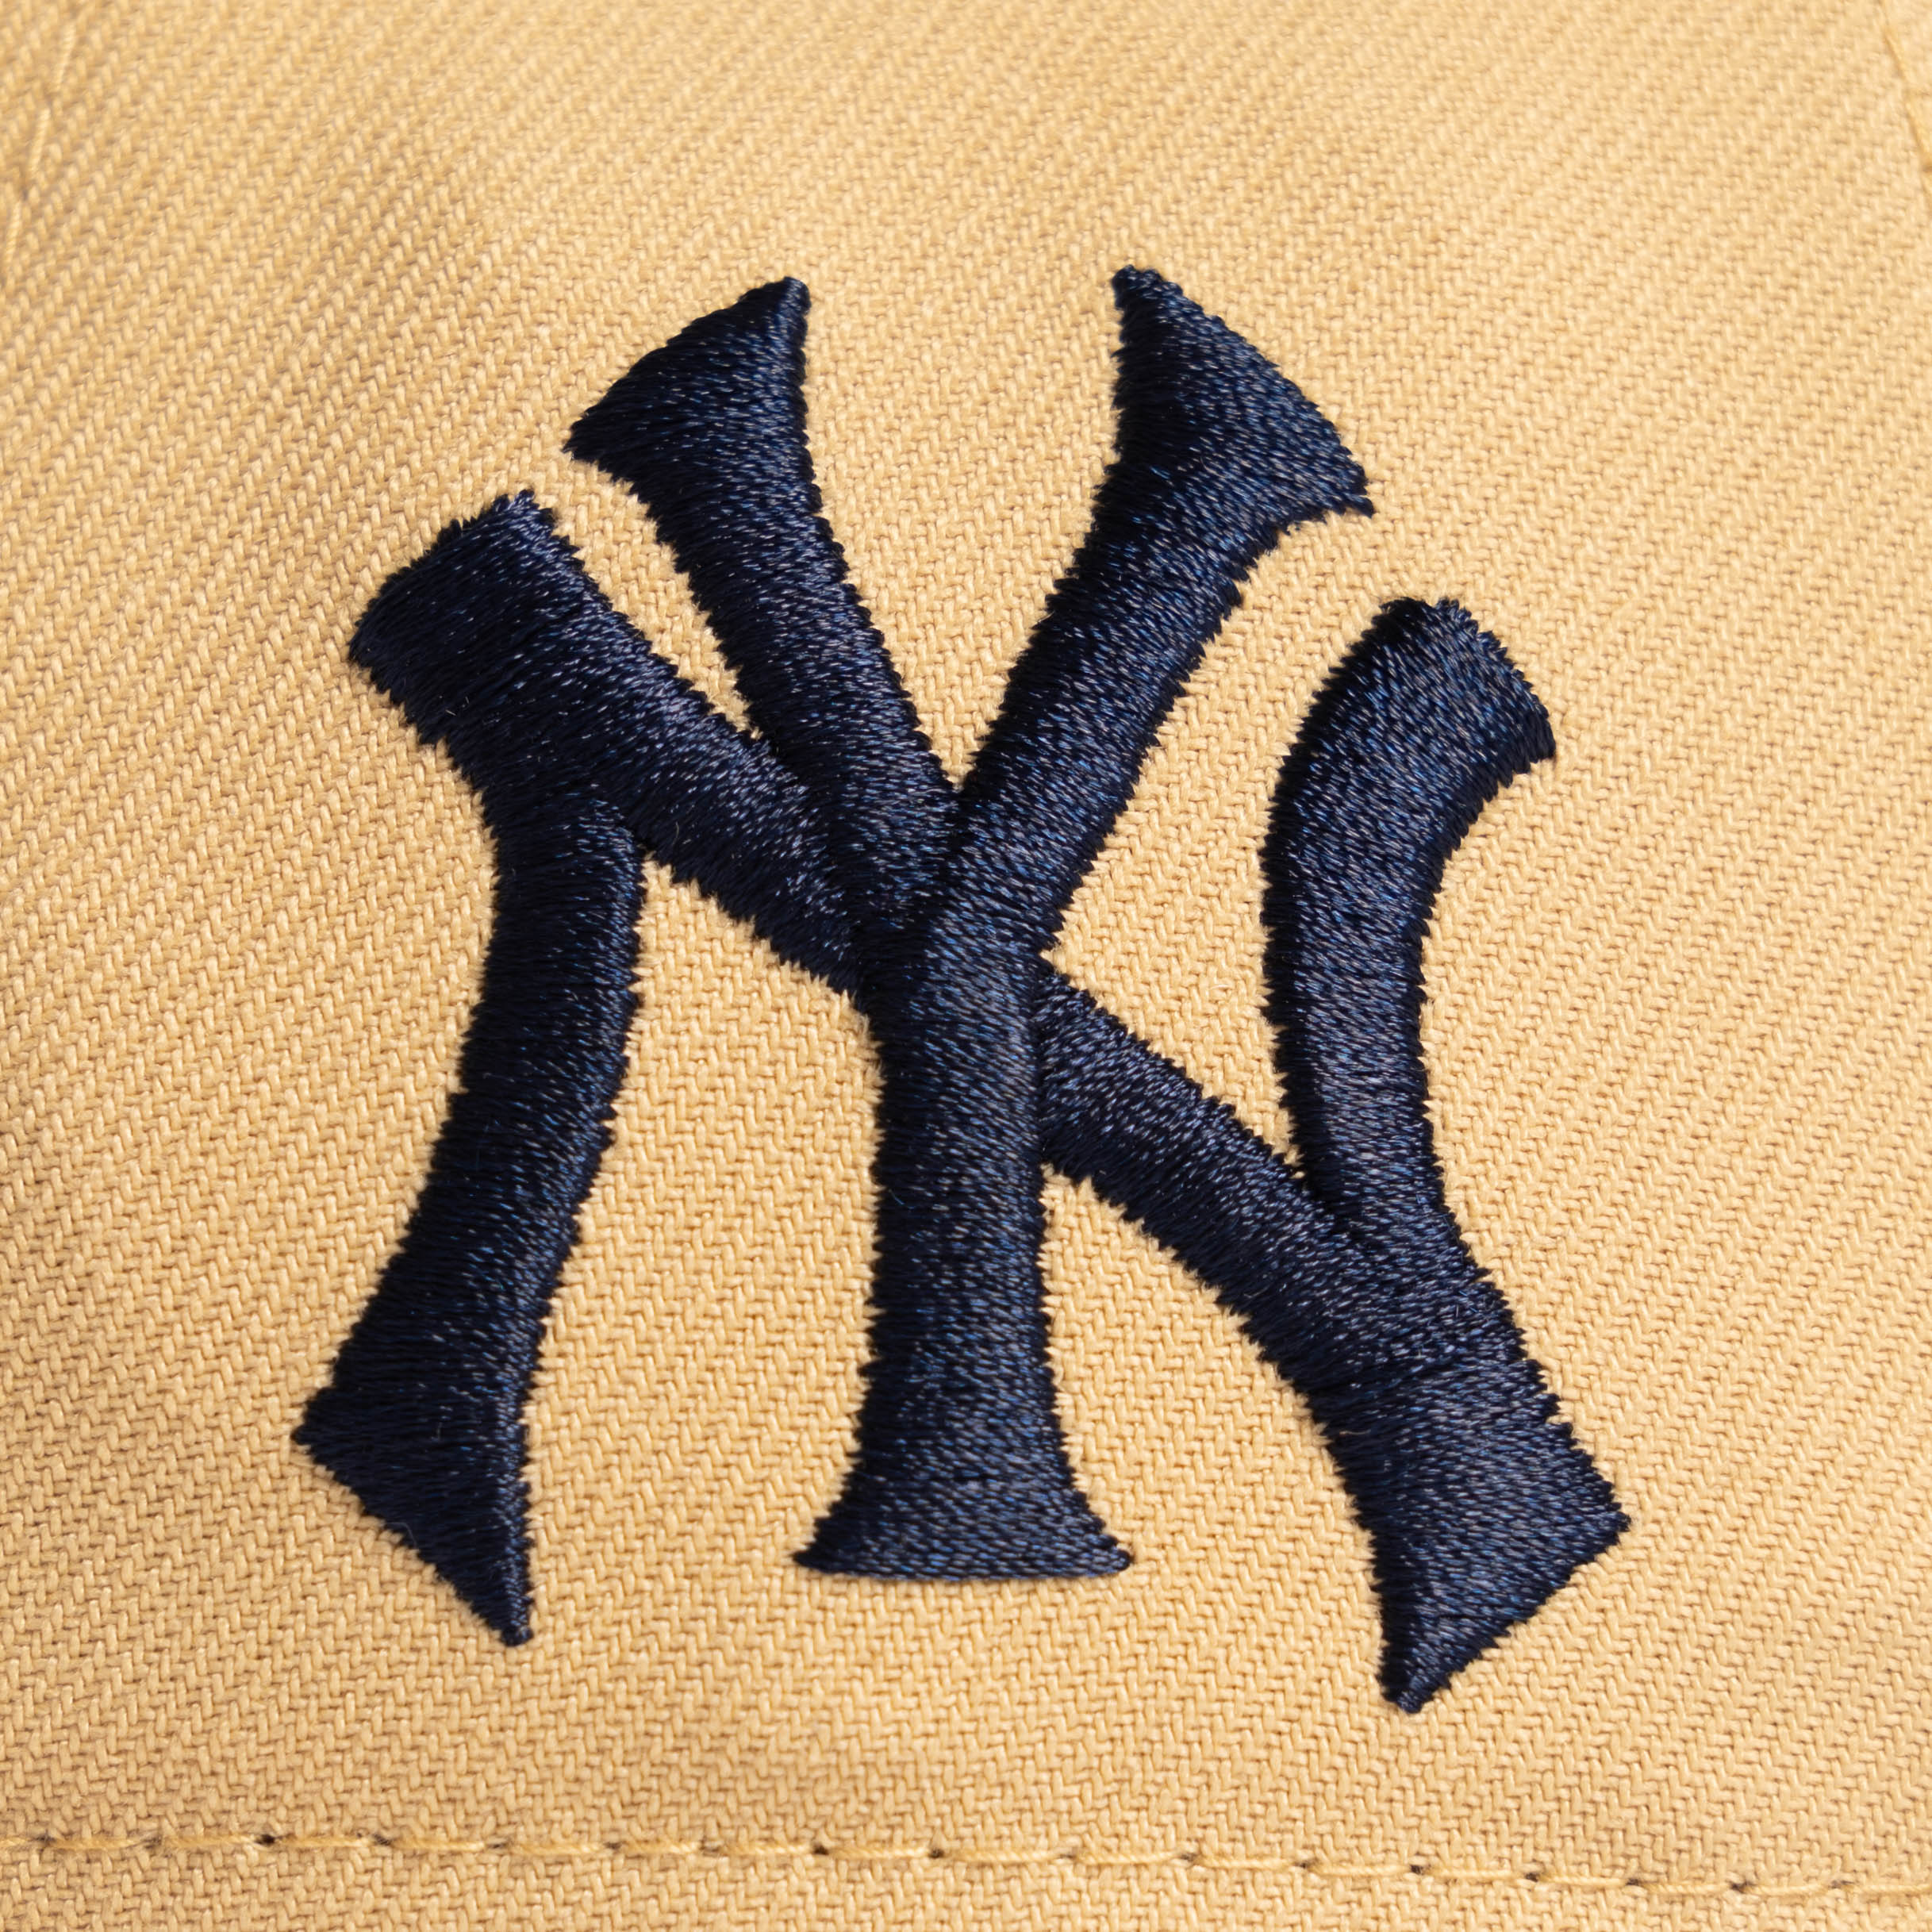 New Era New York Yankees Snapback